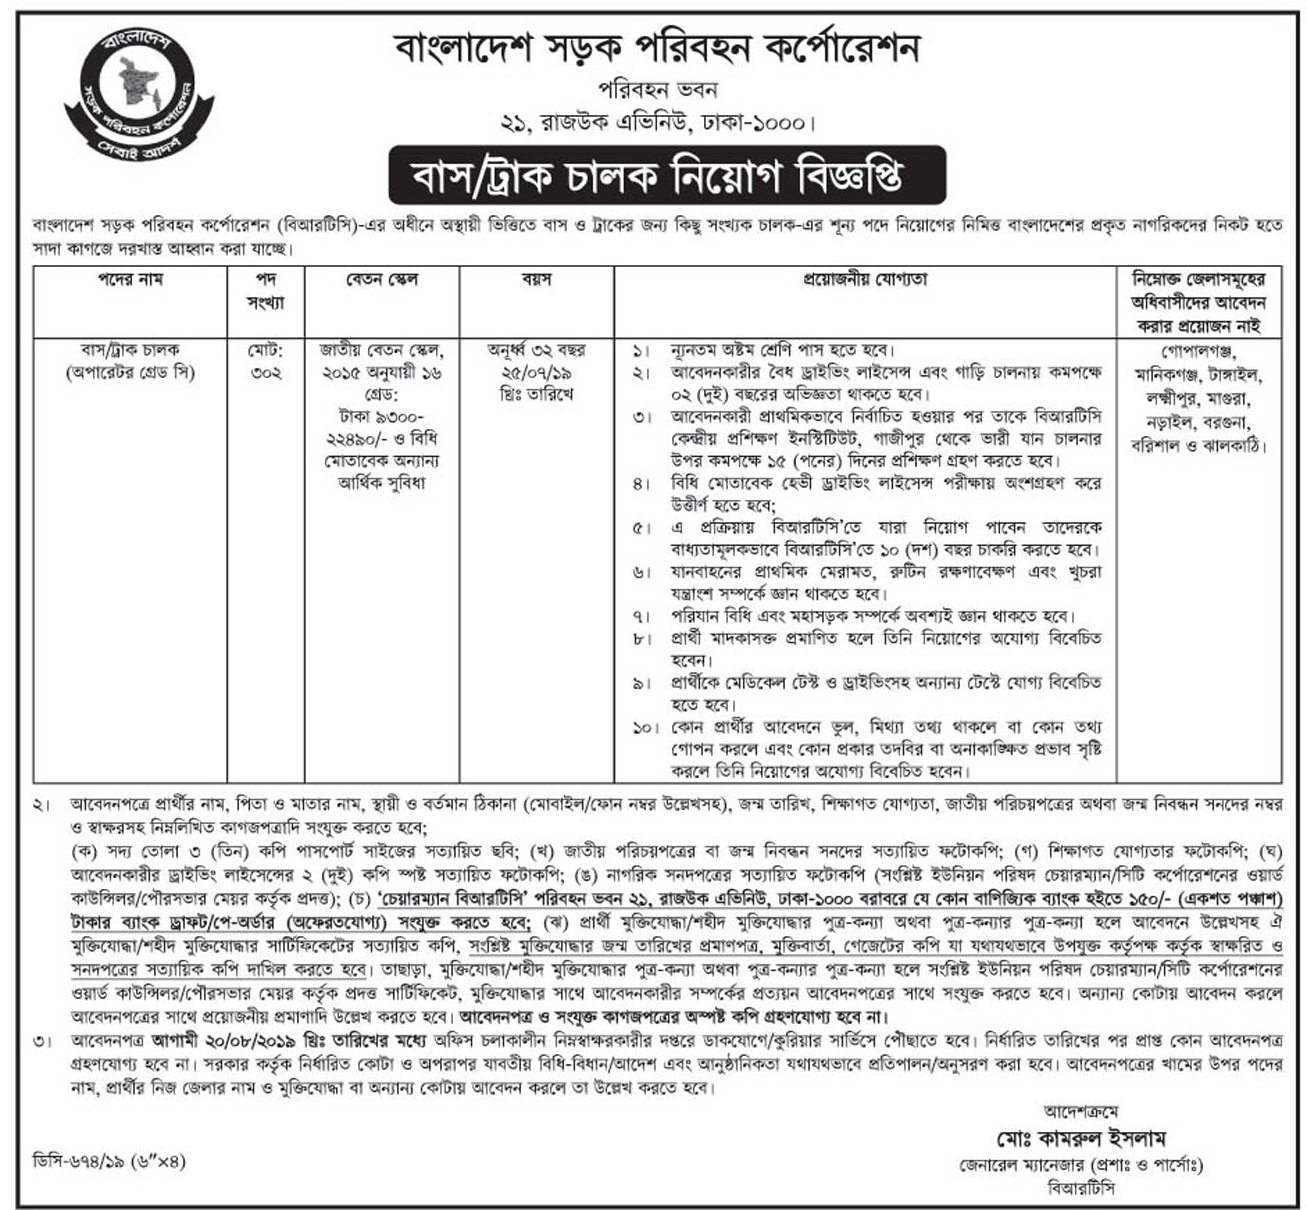 Bangladesh Road Transport Corporation New Job Circular-2019